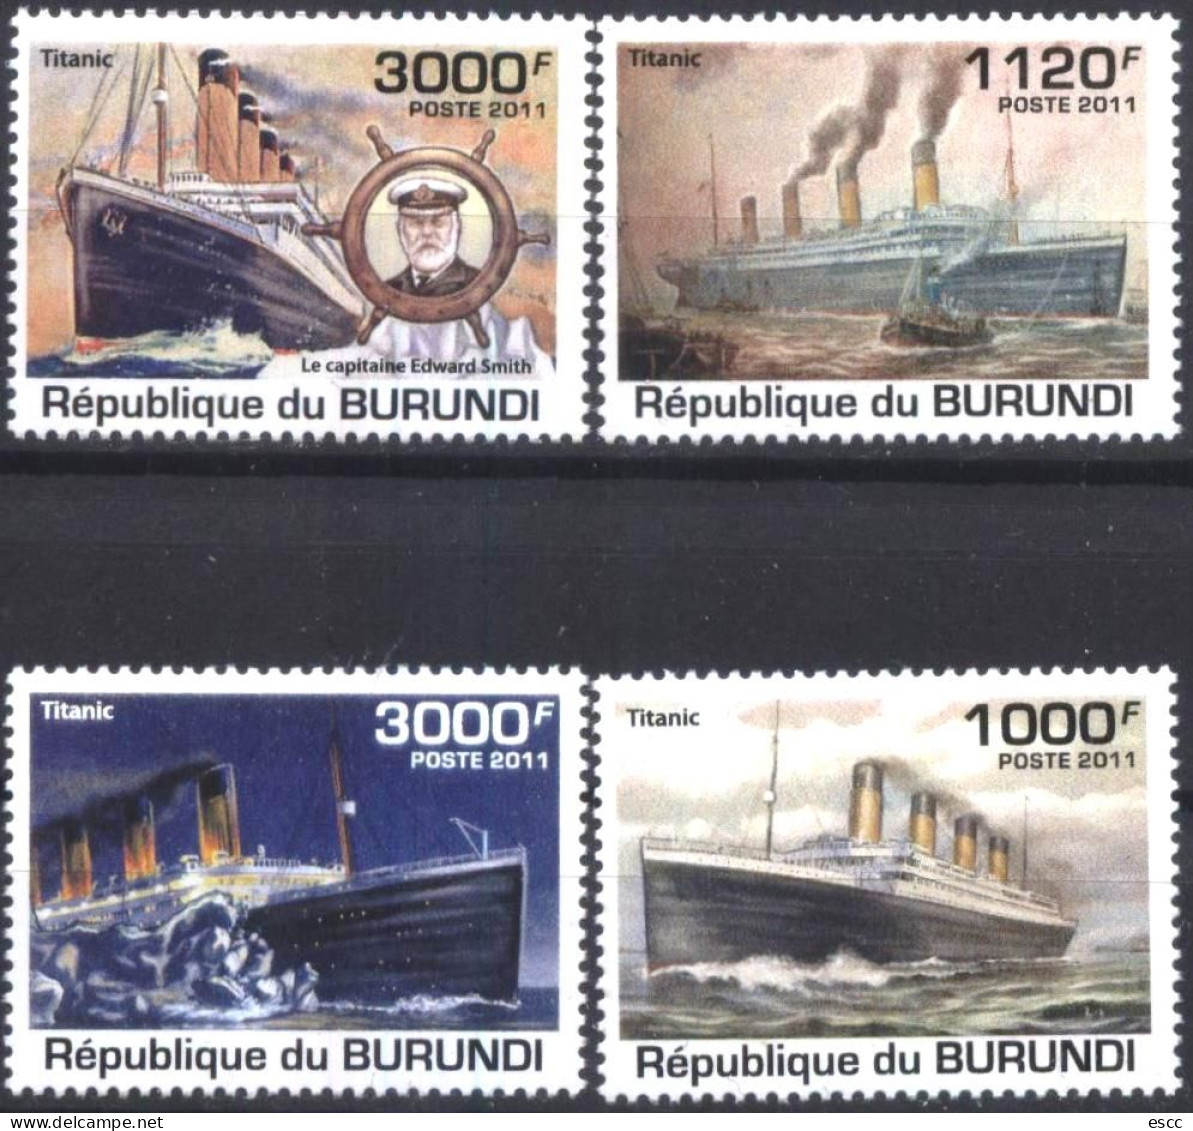 Mint Stamps Ships Titanic 2011 From Burundi - Bateaux